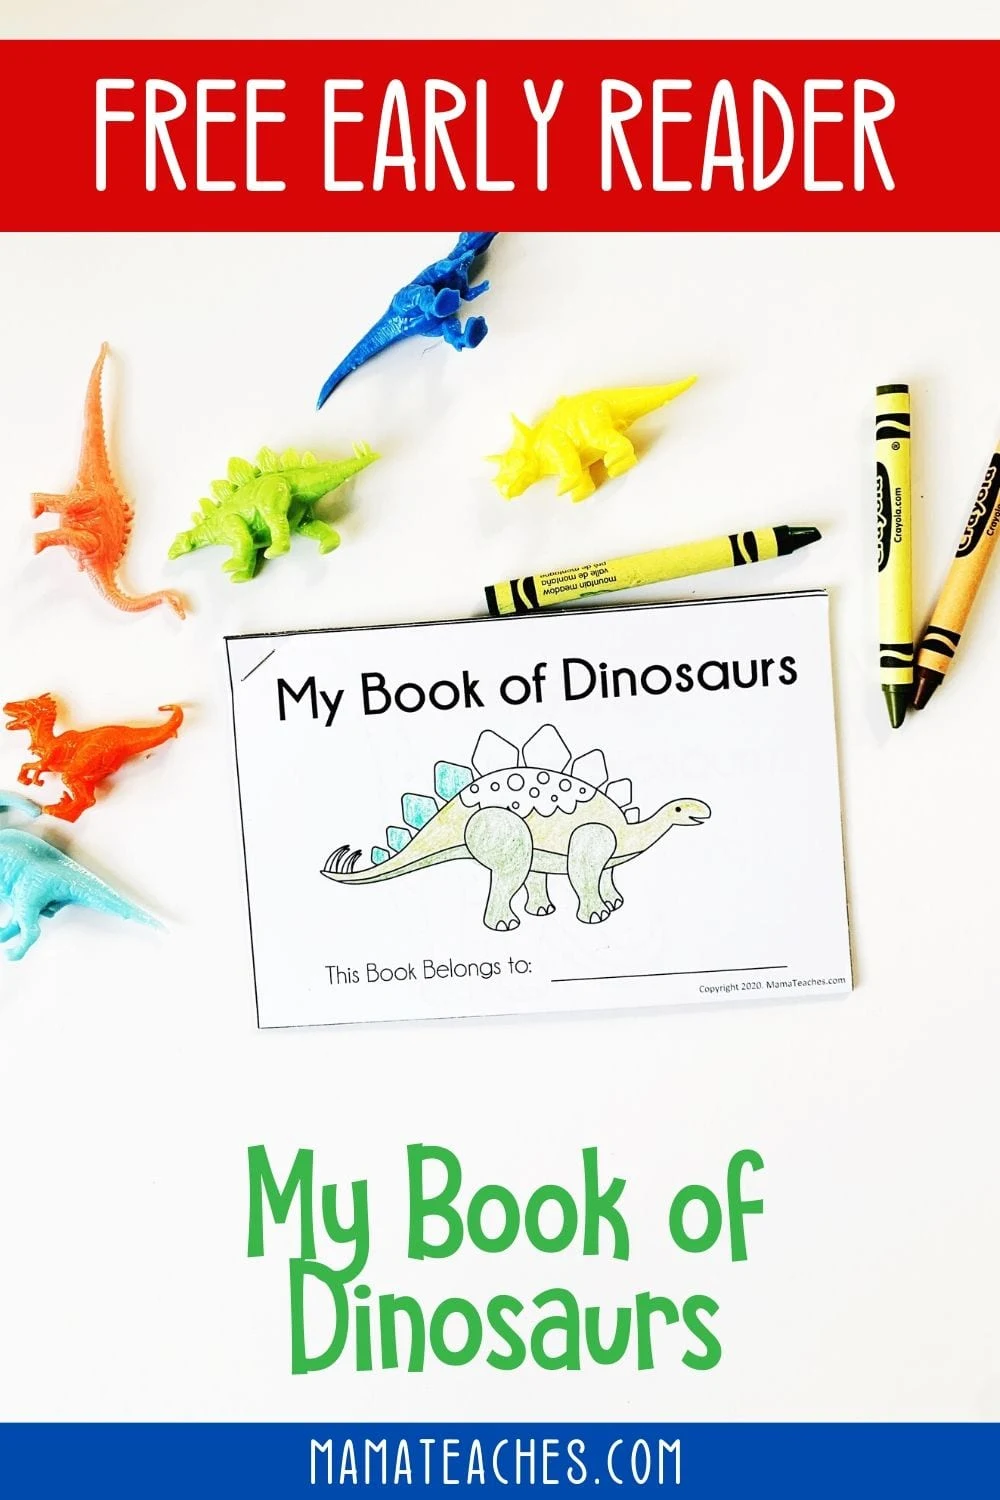 Free Preschool Early Reader - My Book of Dinosaurs - A Book of Dinosaurs for Preschoolers